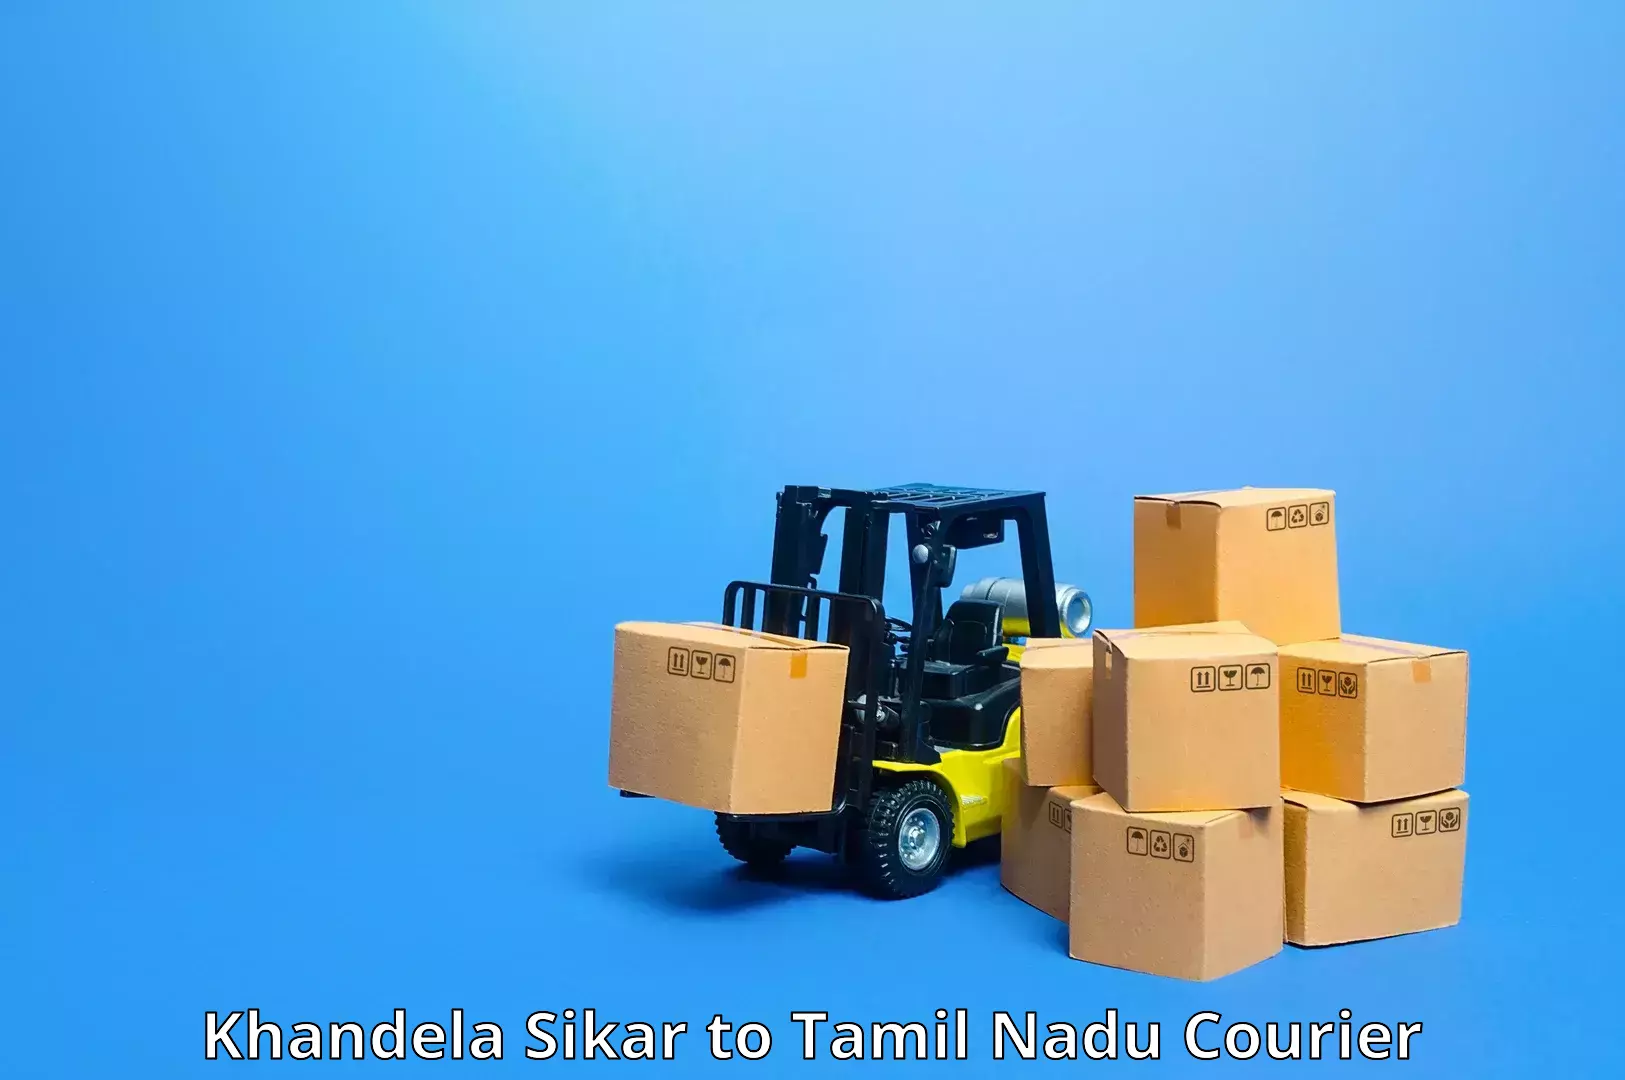 Express package services Khandela Sikar to University of Madras Chennai